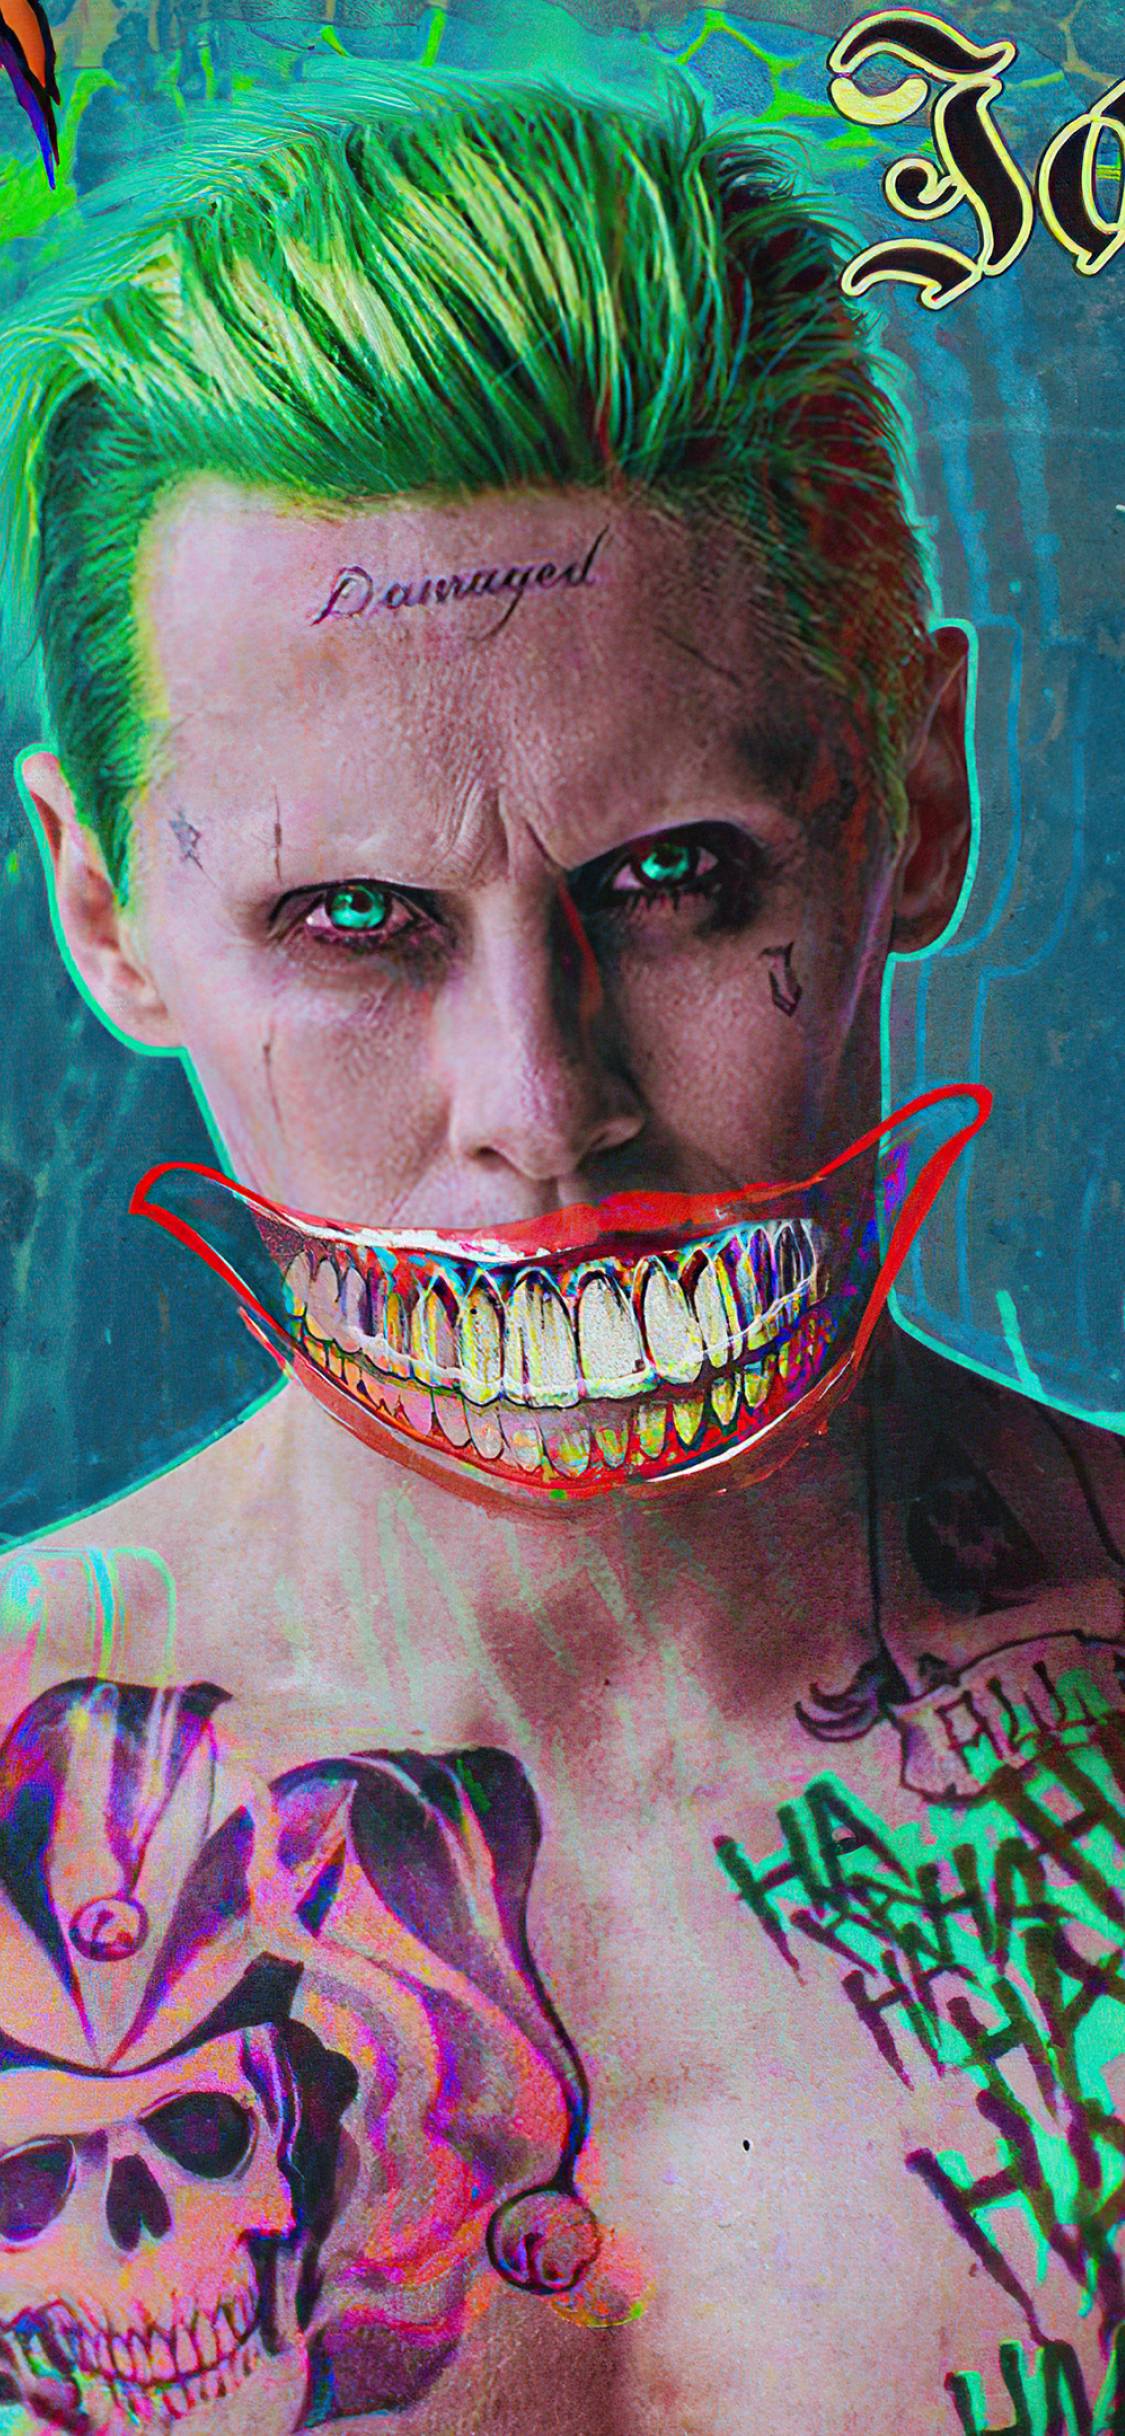 Jared Leto Joker Justice League Crazy Art Wallpapers